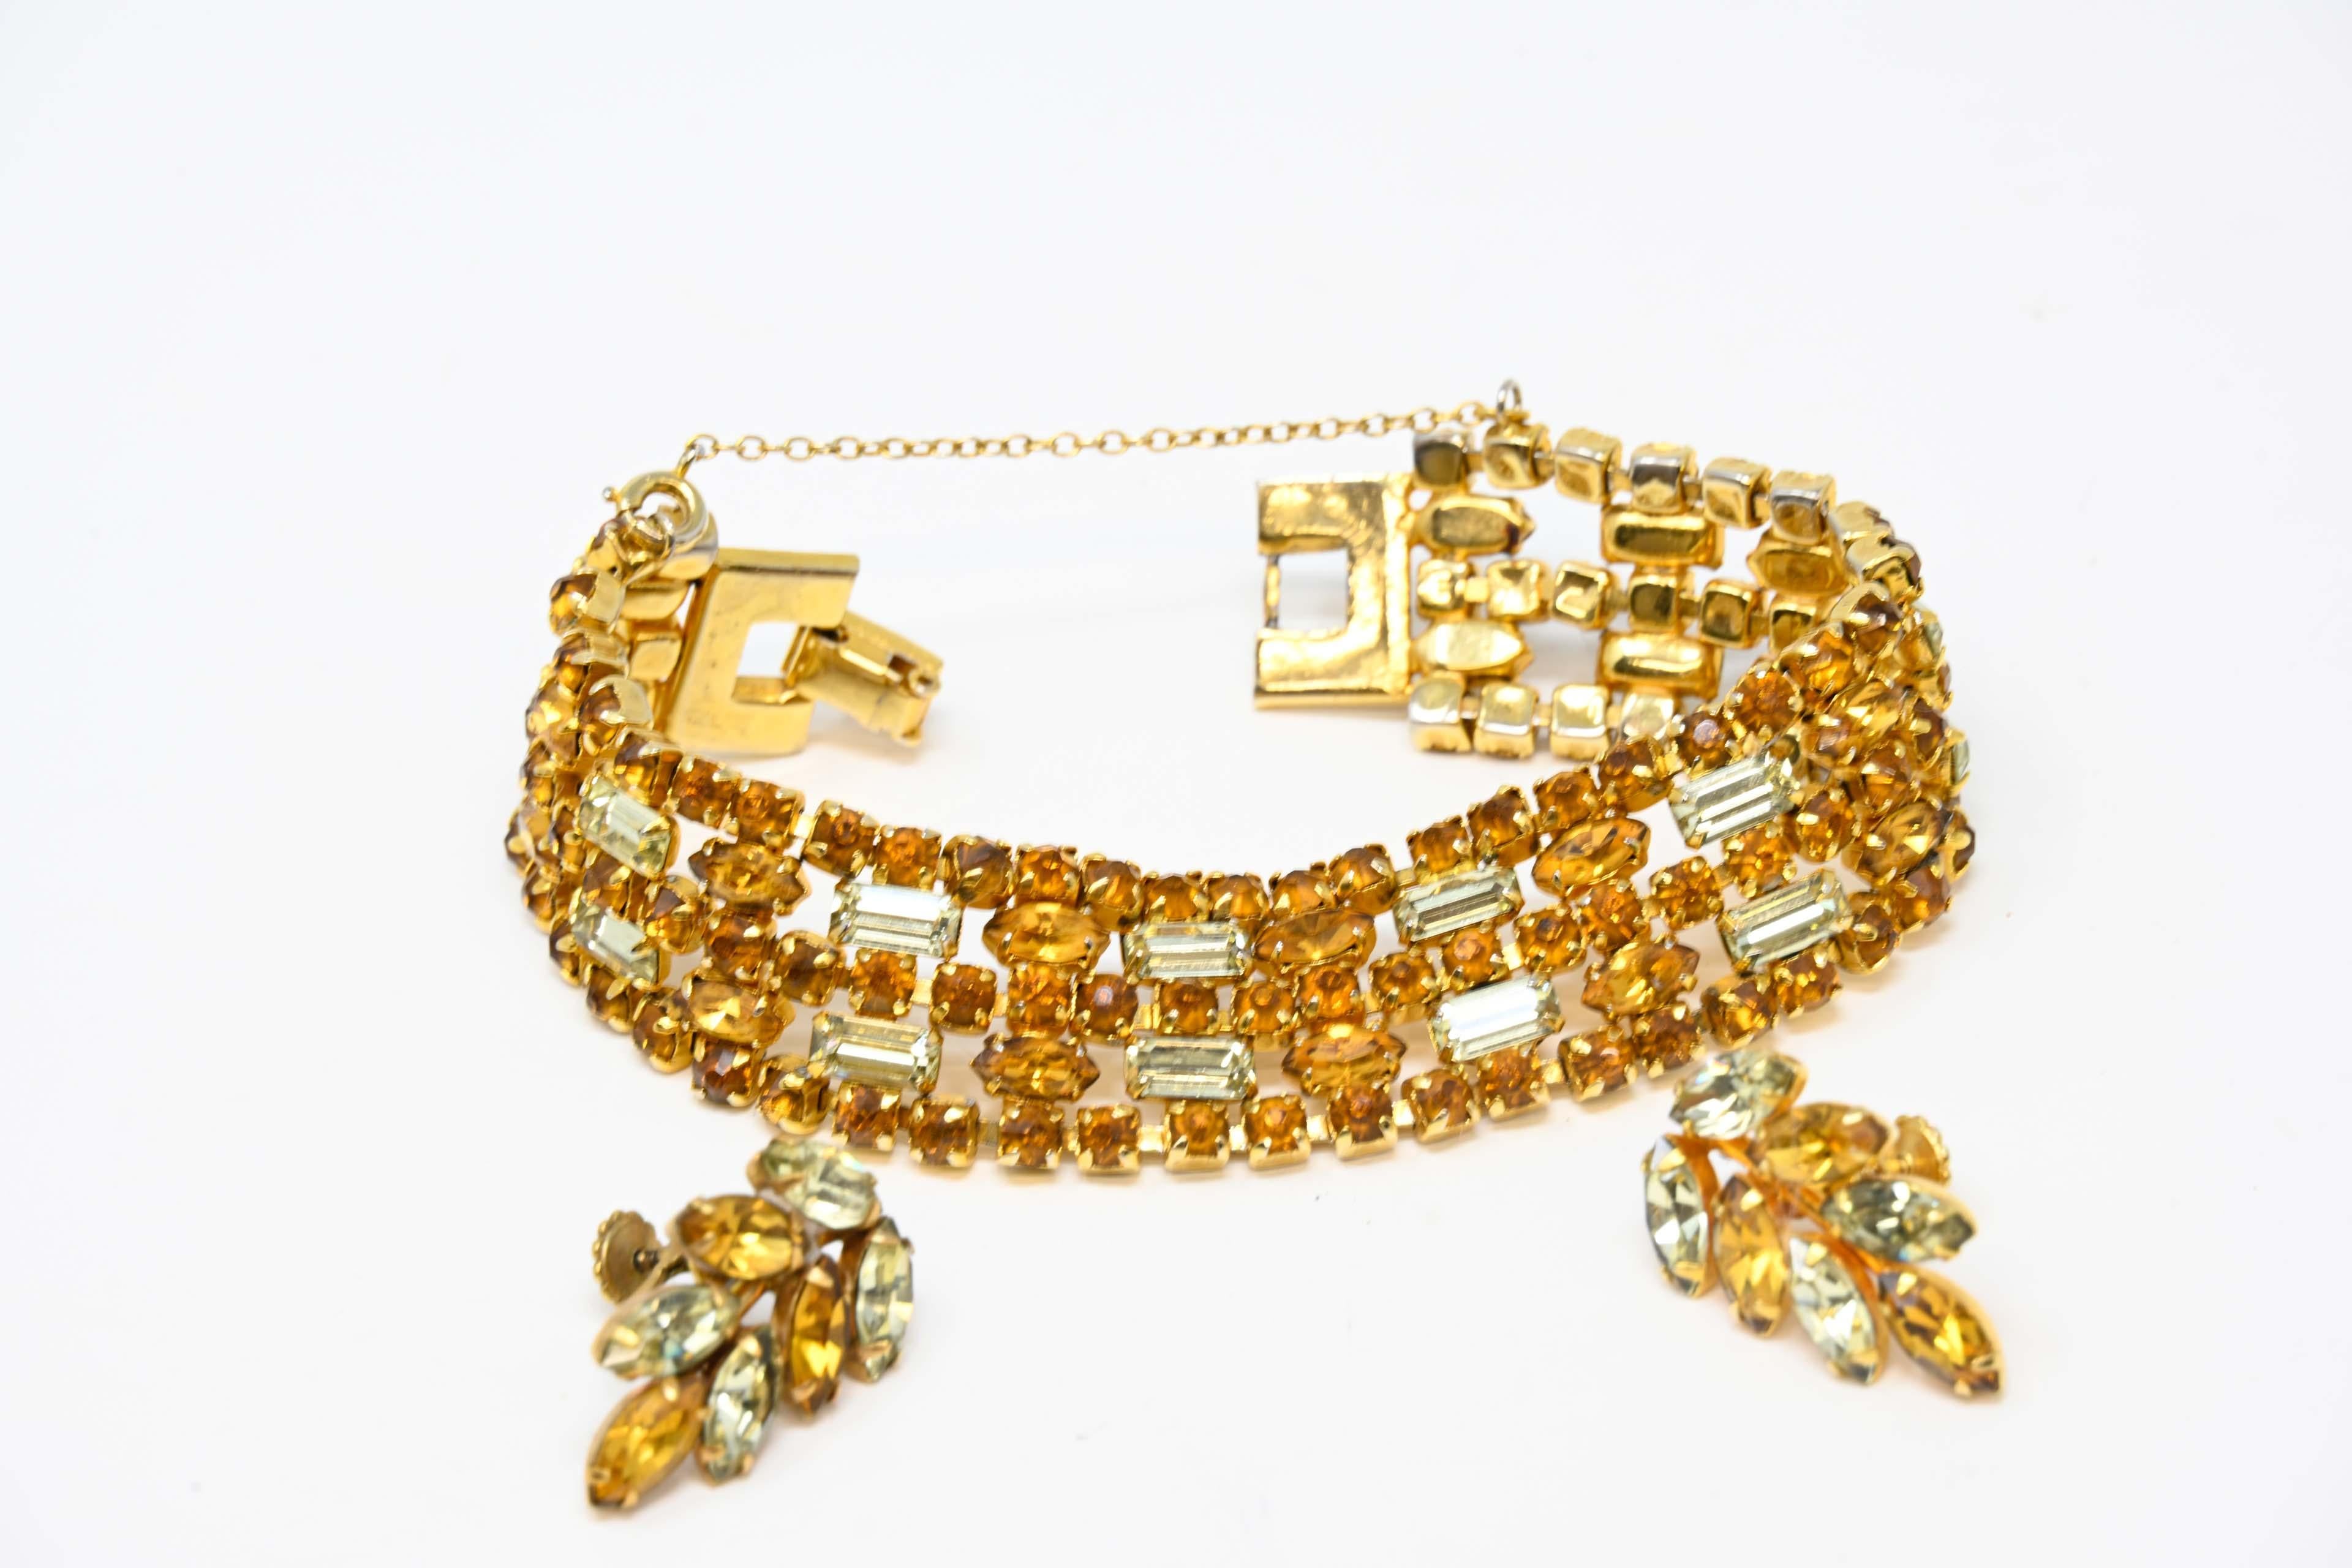 jewels of elegance by sherman